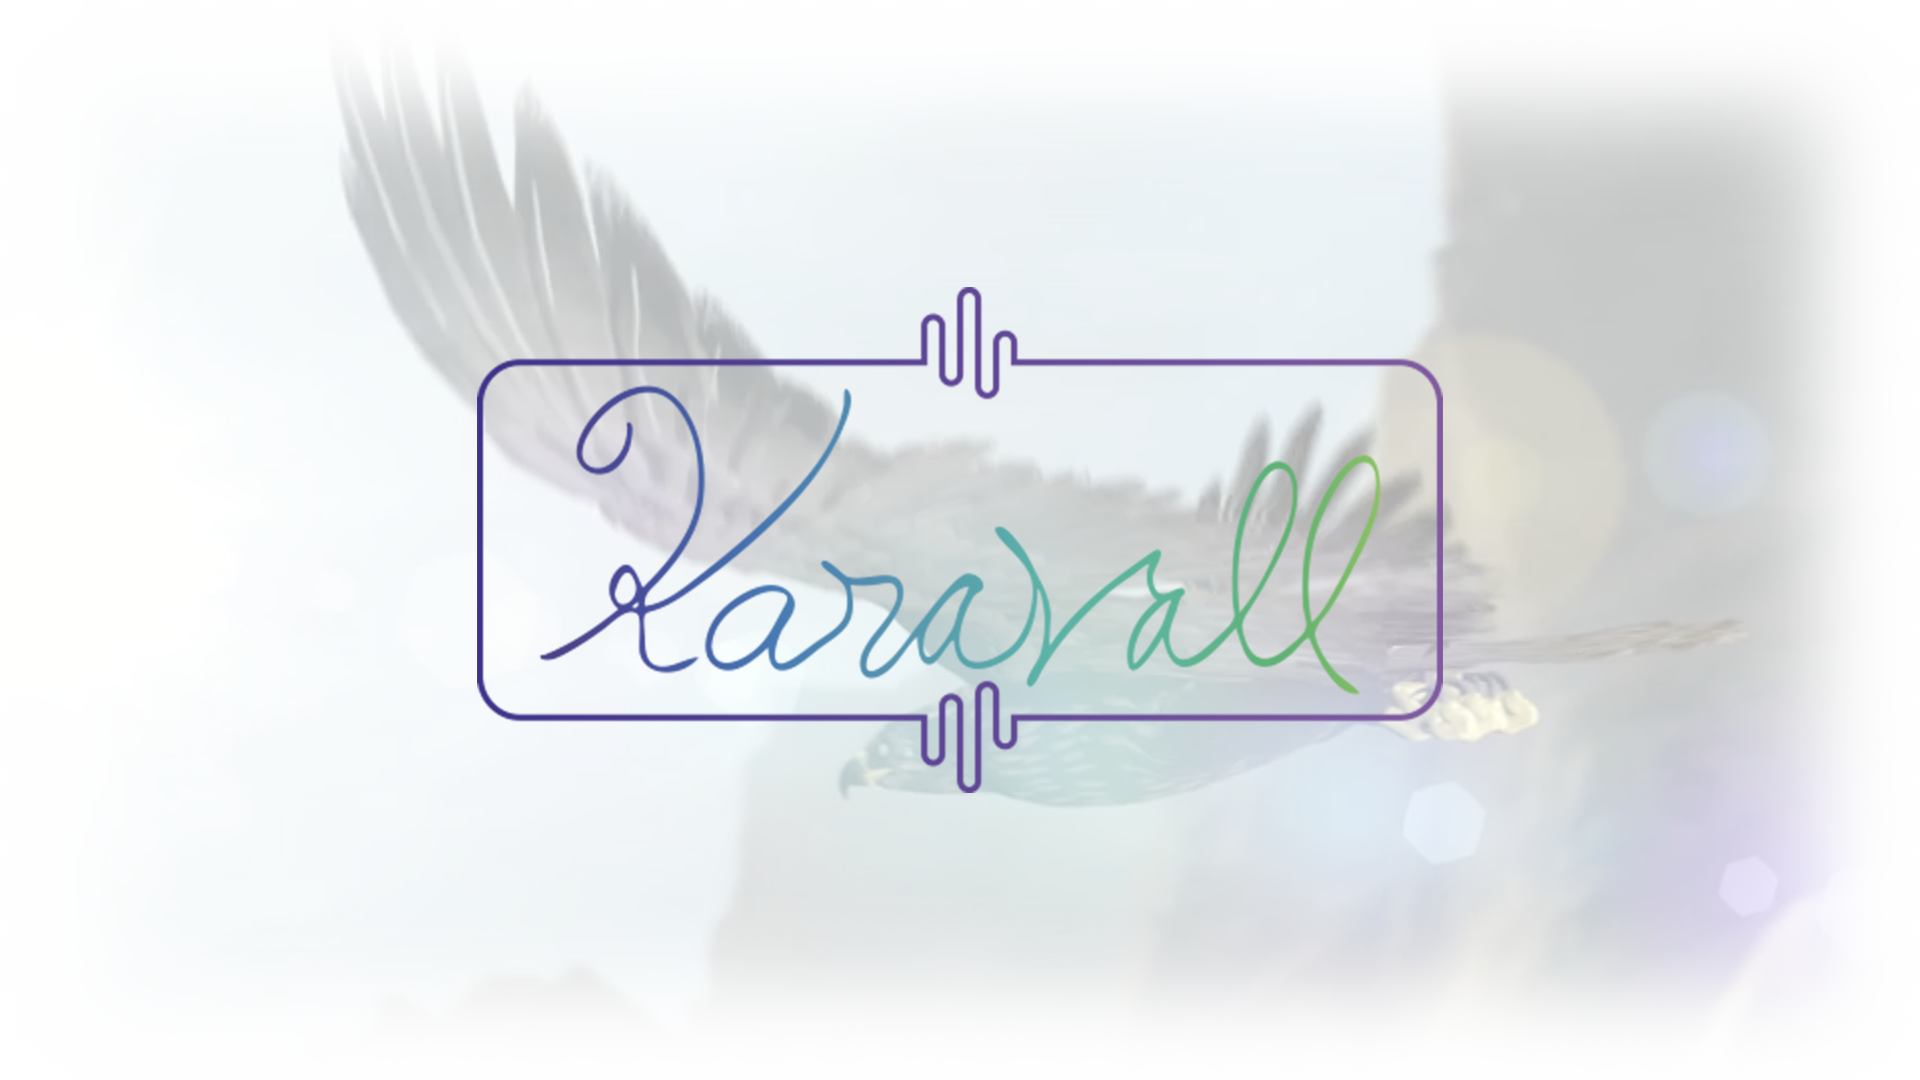 Karavall